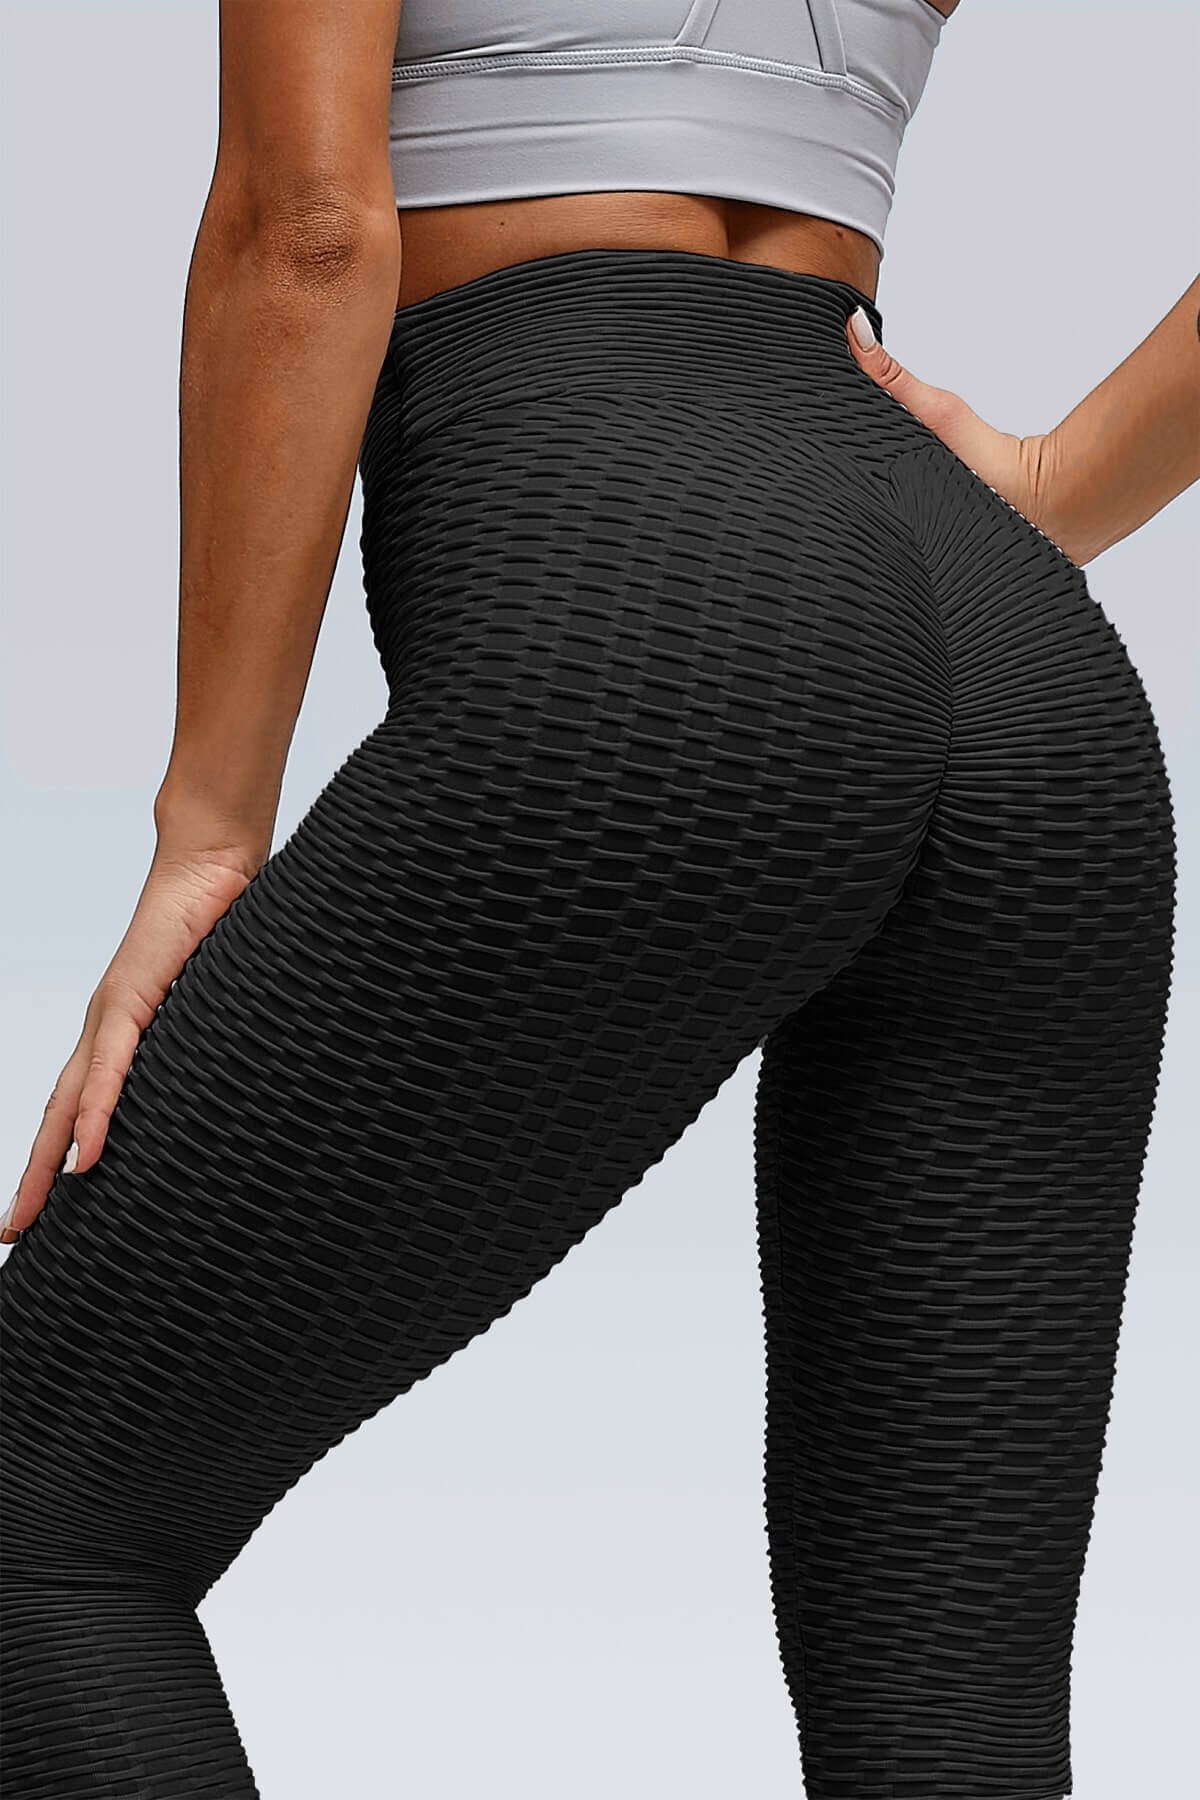 Honeycomb Scrunch Butt Lift Yoga Pants Tight Leggings + Sequin